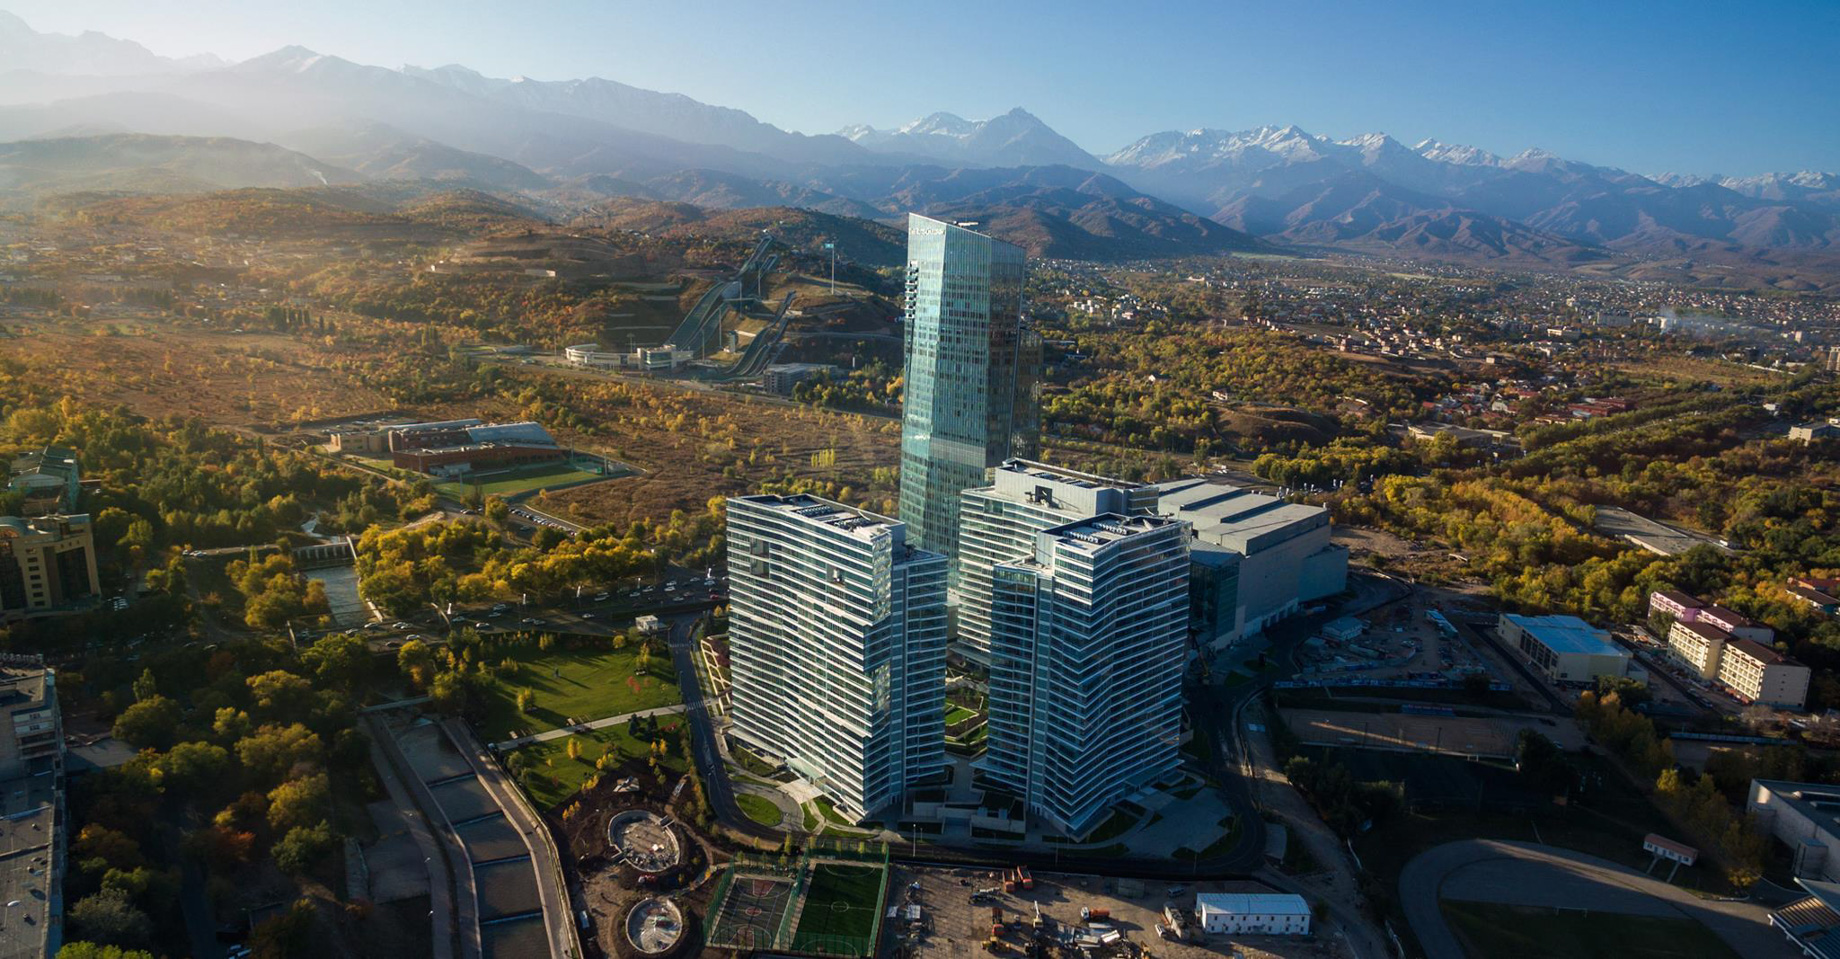 The Ritz-Carlton, Almaty Hotel - Almaty, Kazakhstan - Exterior Aerial View